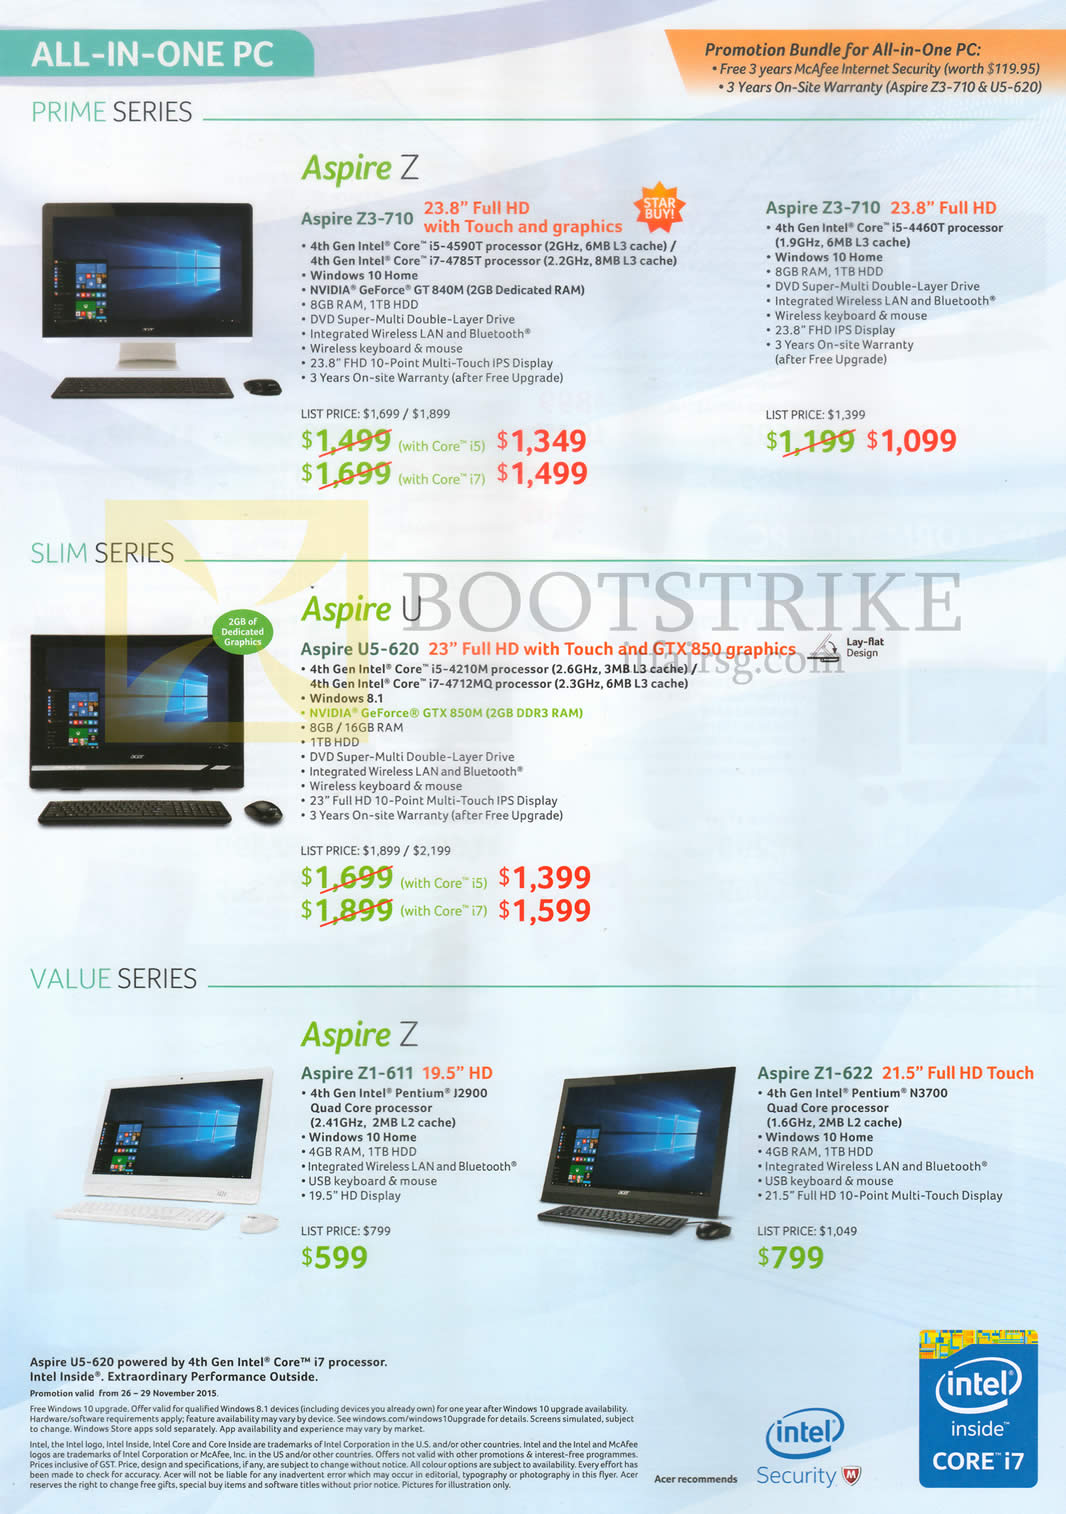 SITEX 2015 price list image brochure of Acer AIO Desktop PCs Aspire Z3-710, U5-620, Z1-611, Z1-622